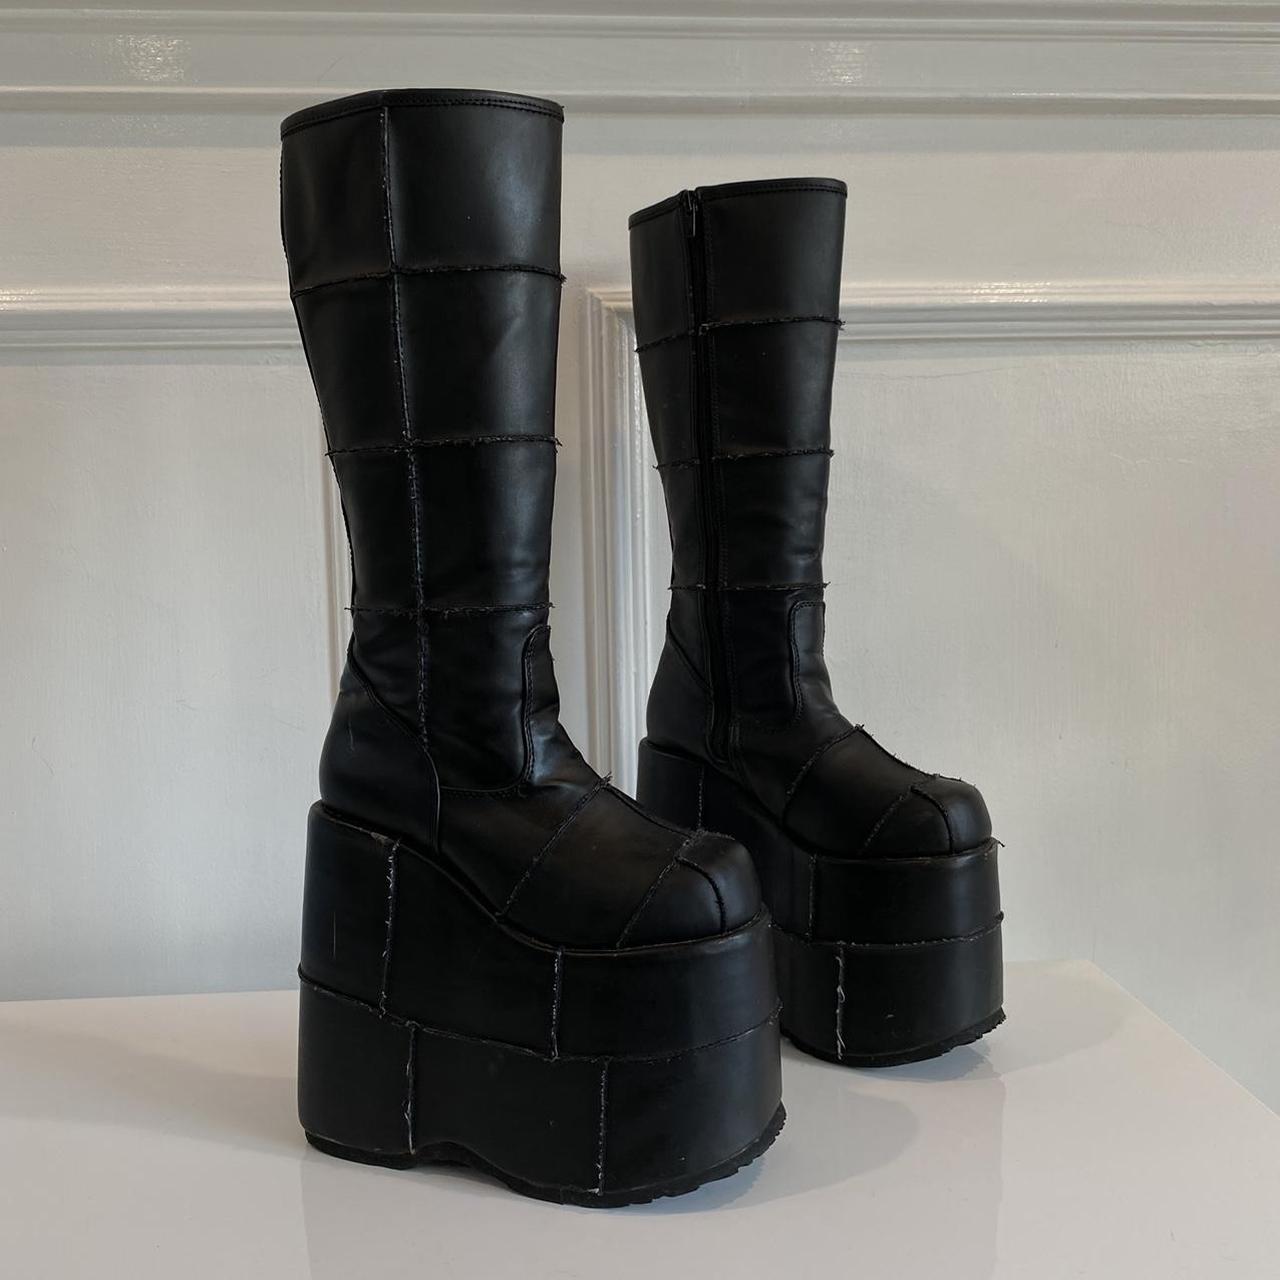 Product Image 1 - Black Demonia platform boots 

Size